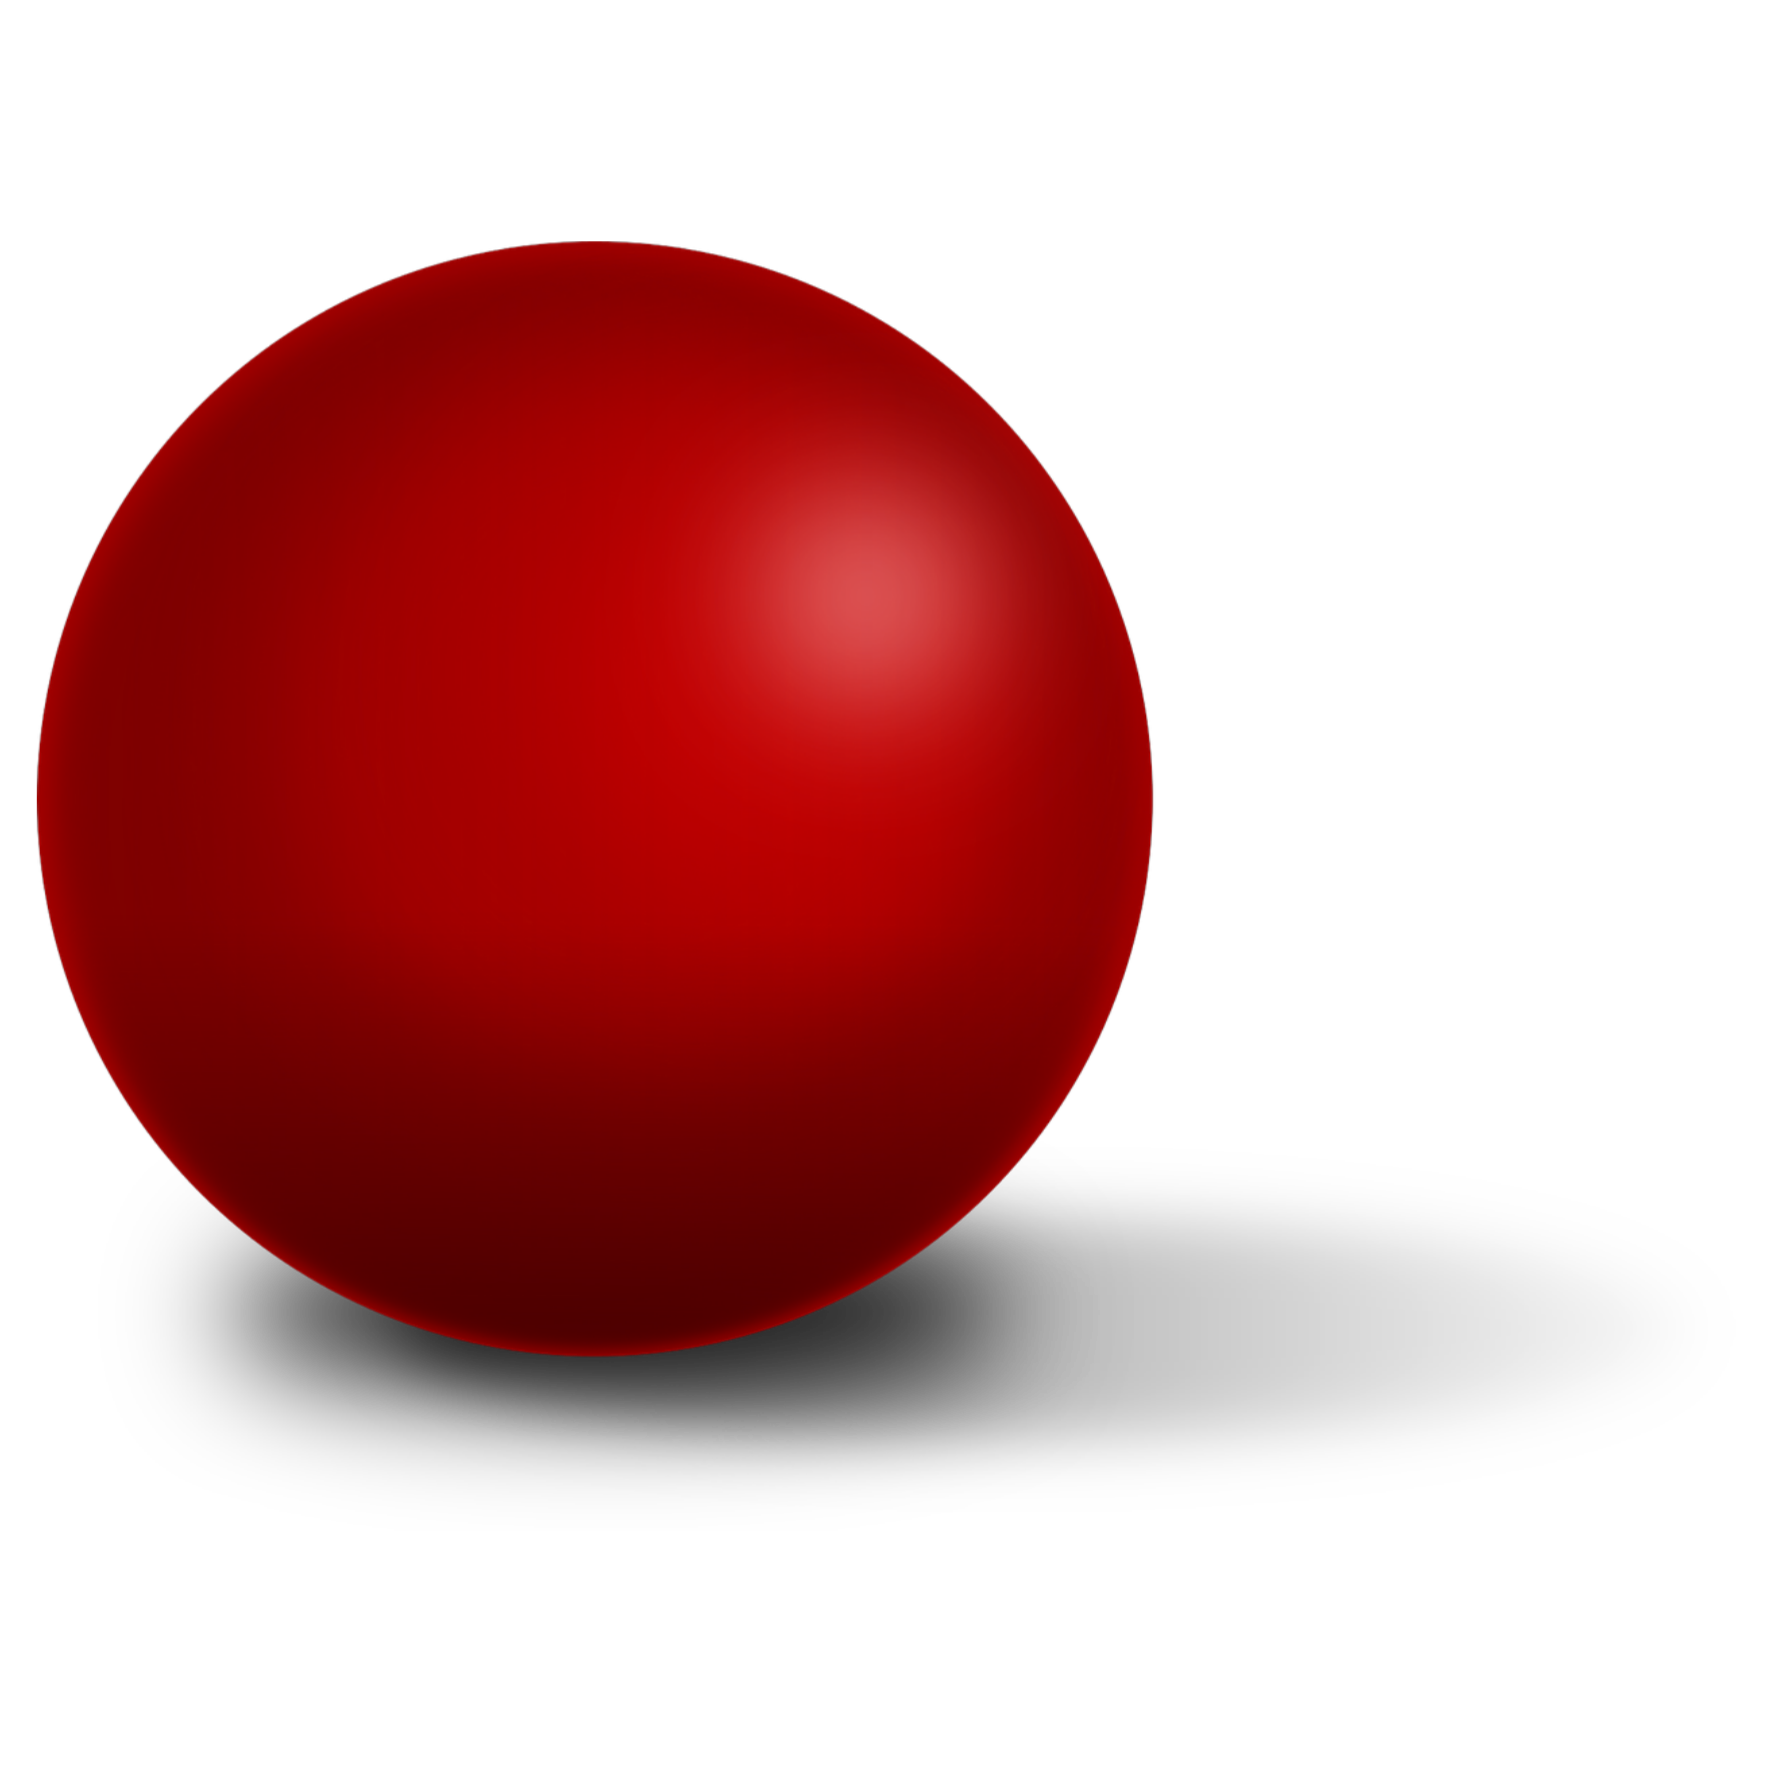 Шаре икс. Красный шар. Красный матовый шар. Красный круглый шар. Шар фигура.